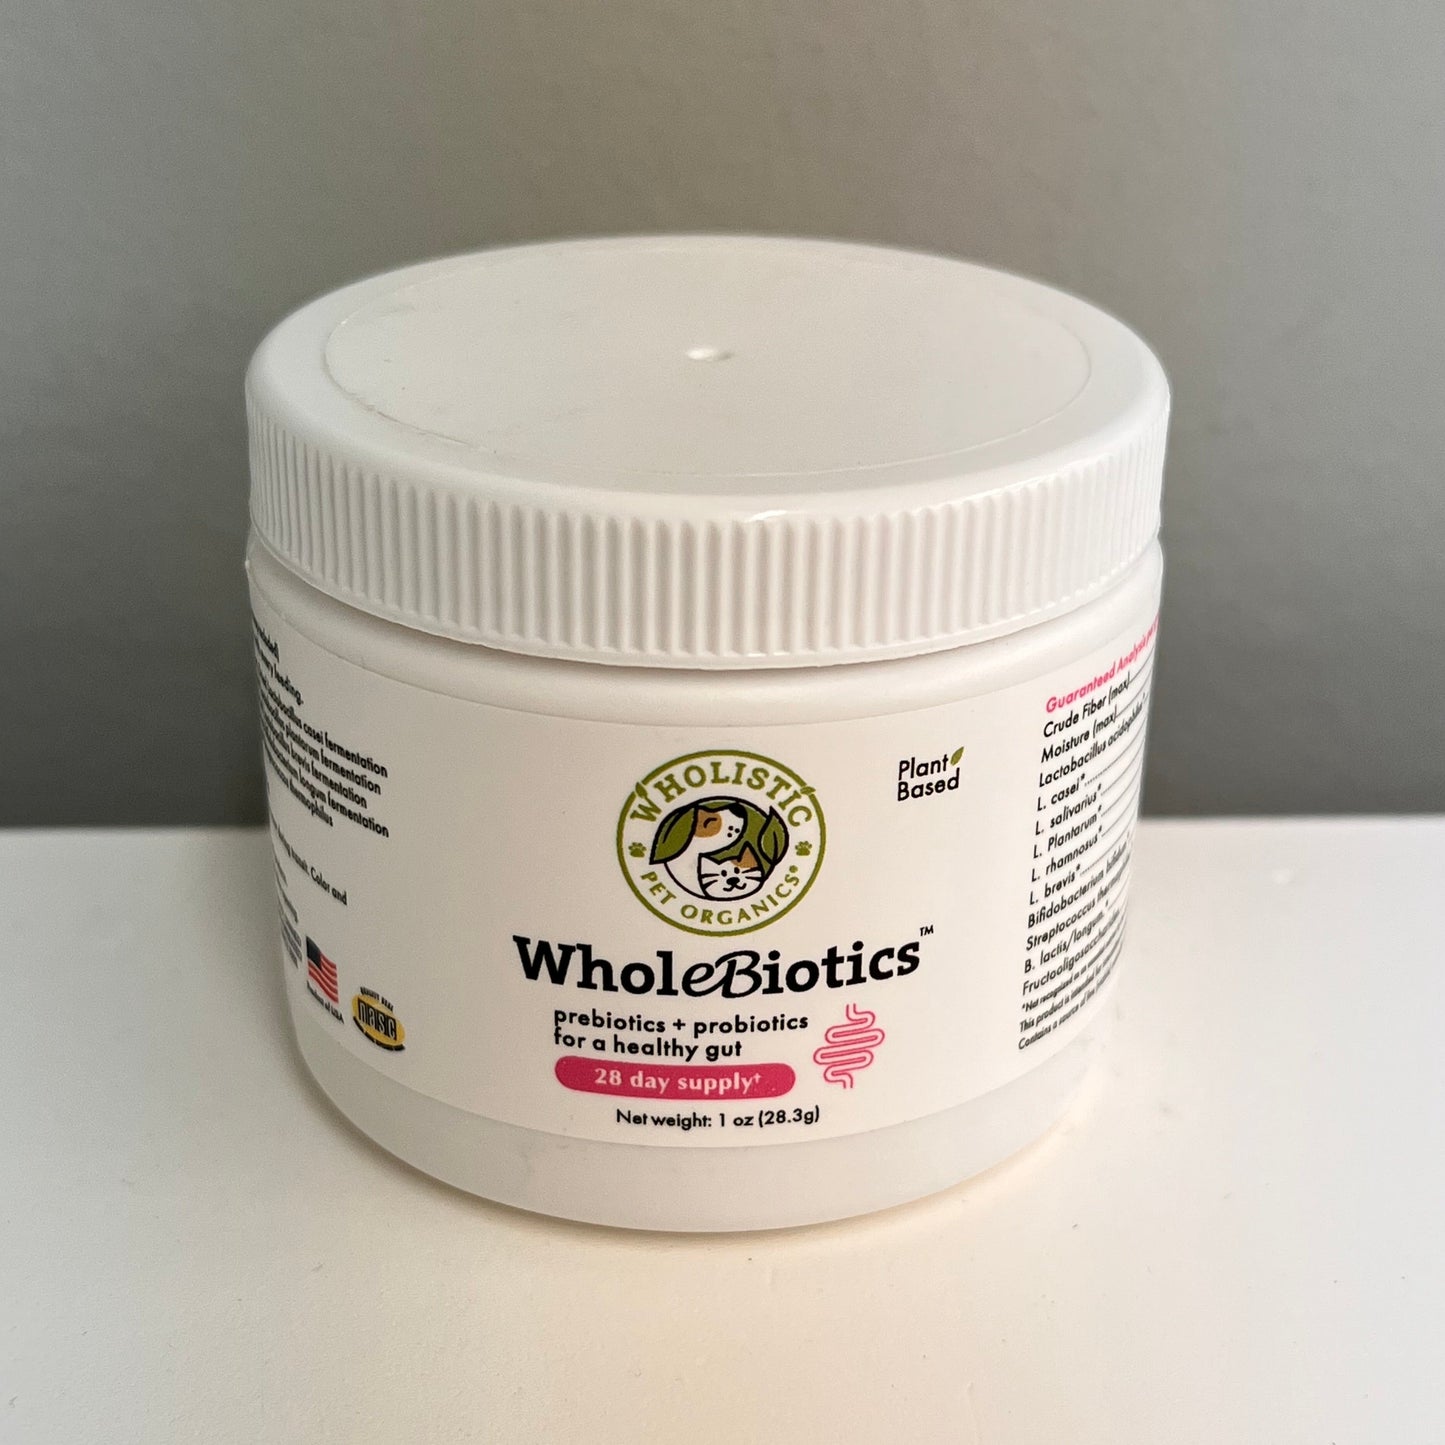 The Wholistic Pet Wholebiotics 1oz